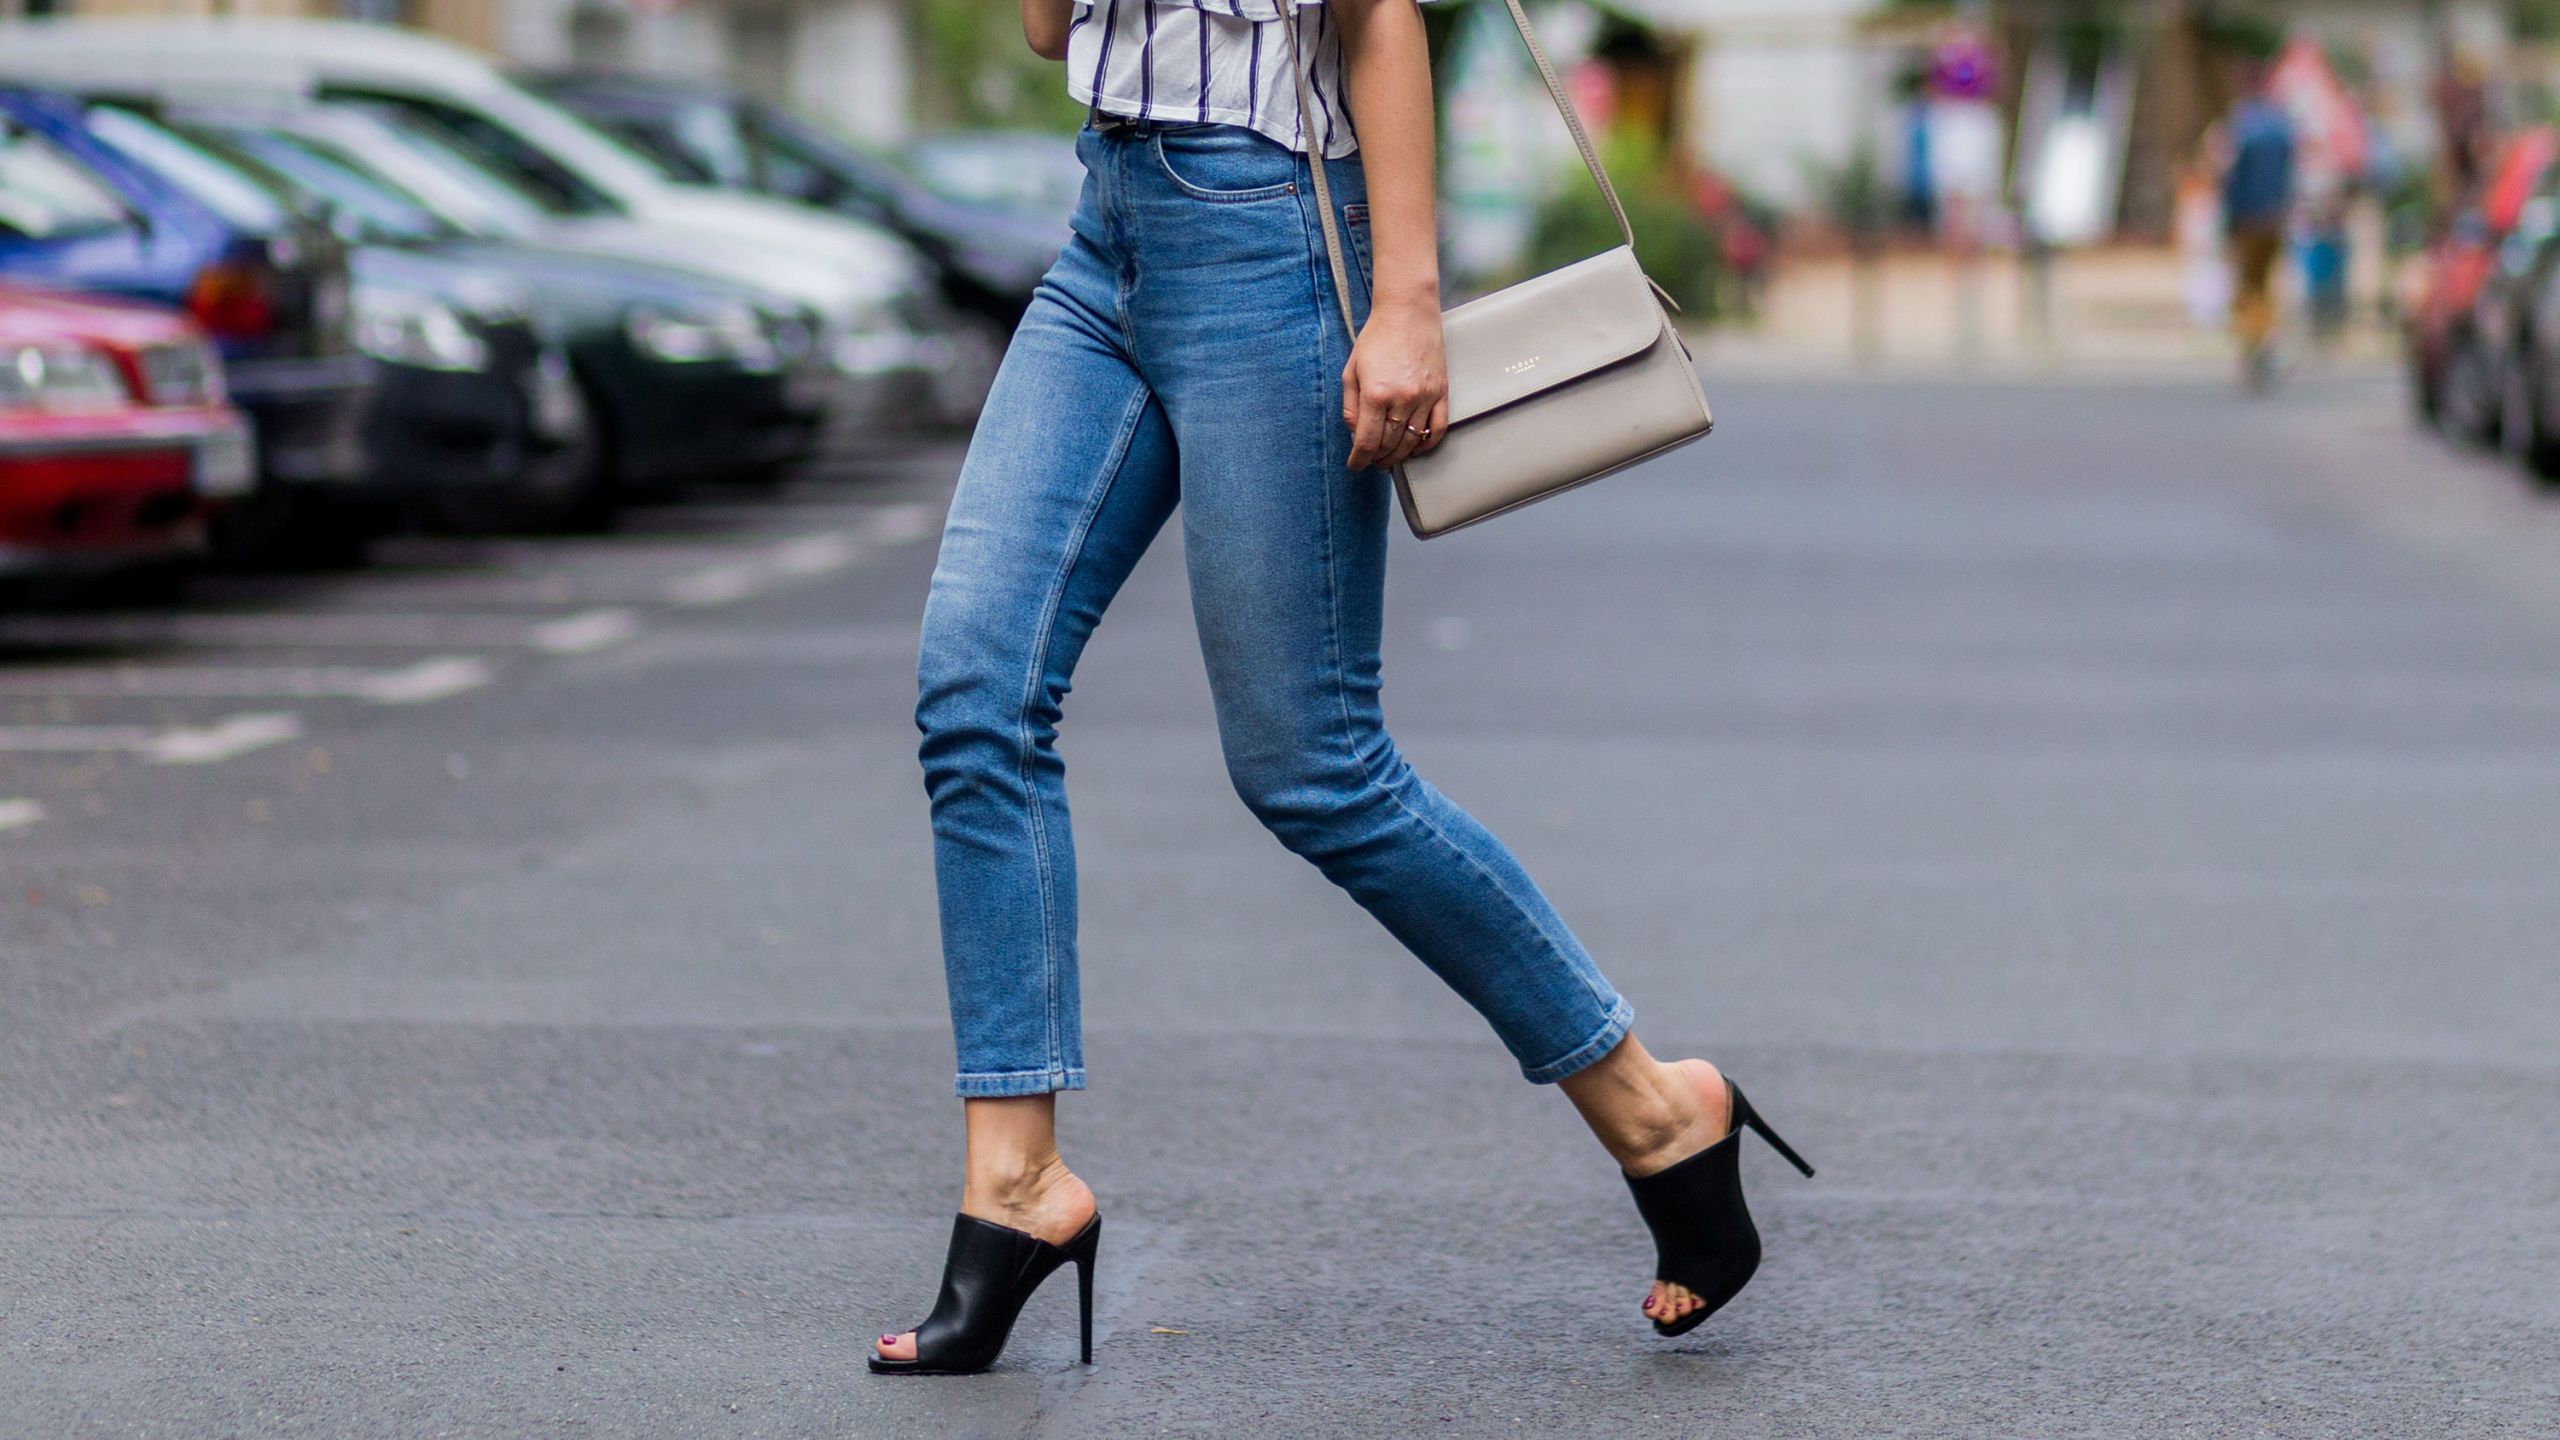 Beverly High Rise Skinny Flared Jeans | Veronica Beard